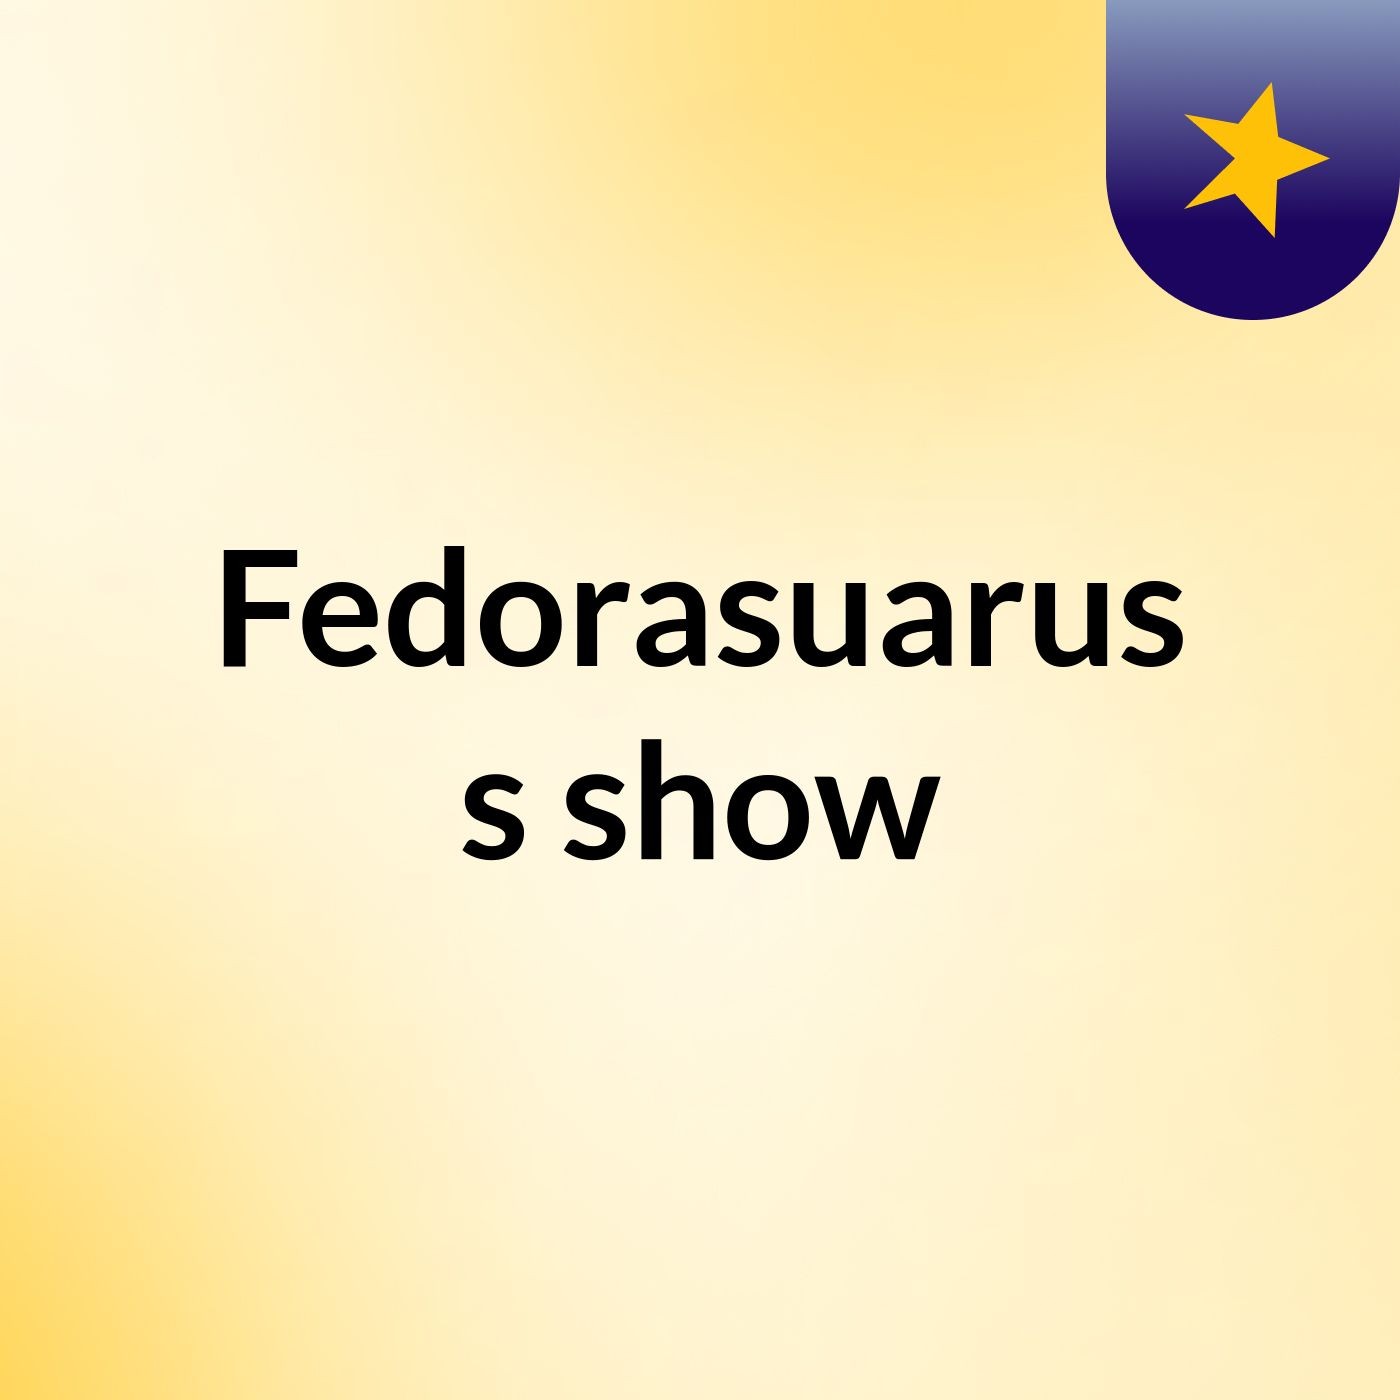 Fedorasuarus's show